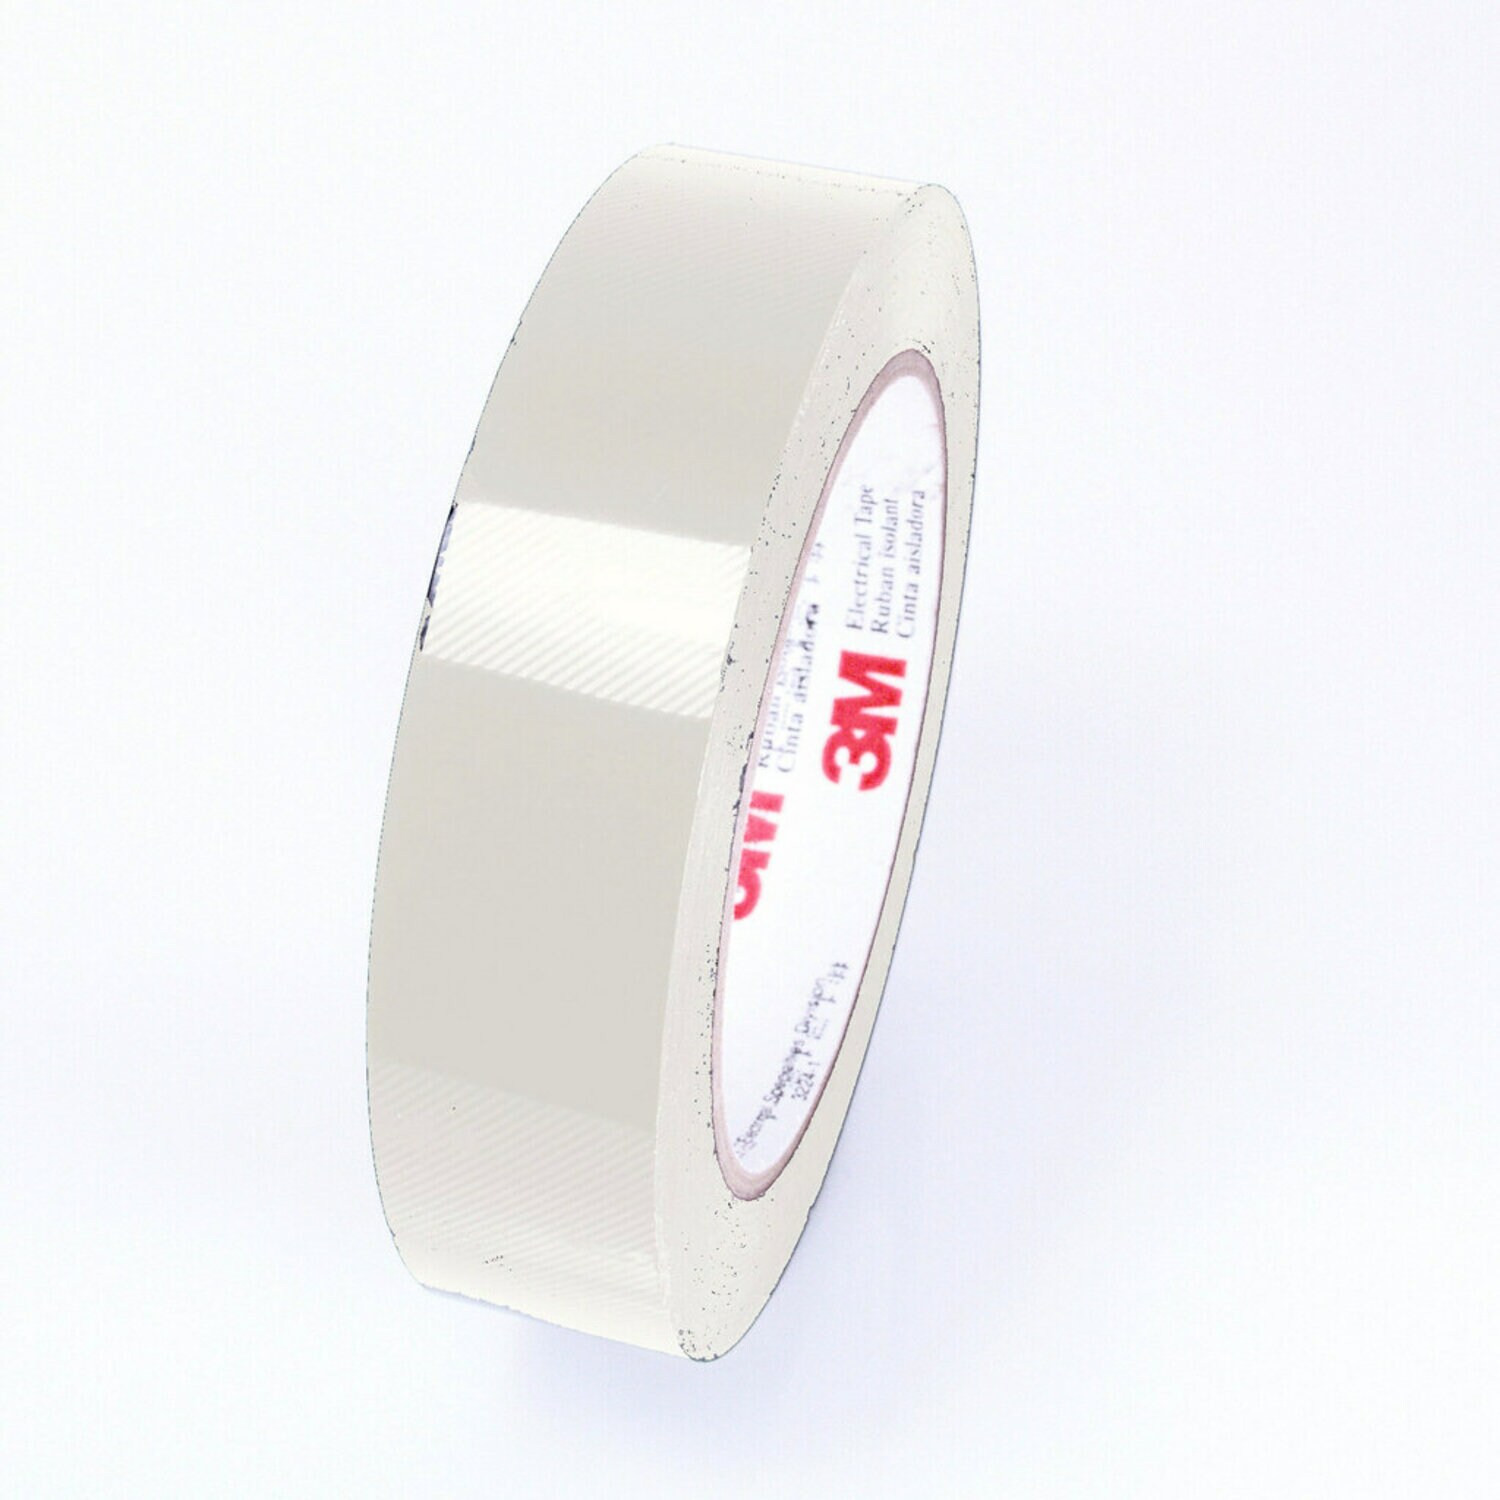 7100134568 - 3M Polyester Film Electrical Tape 5, 1/2-in x 72 yd, 3-in paper core,
Bulk (Advance), 36 Rolls/Case